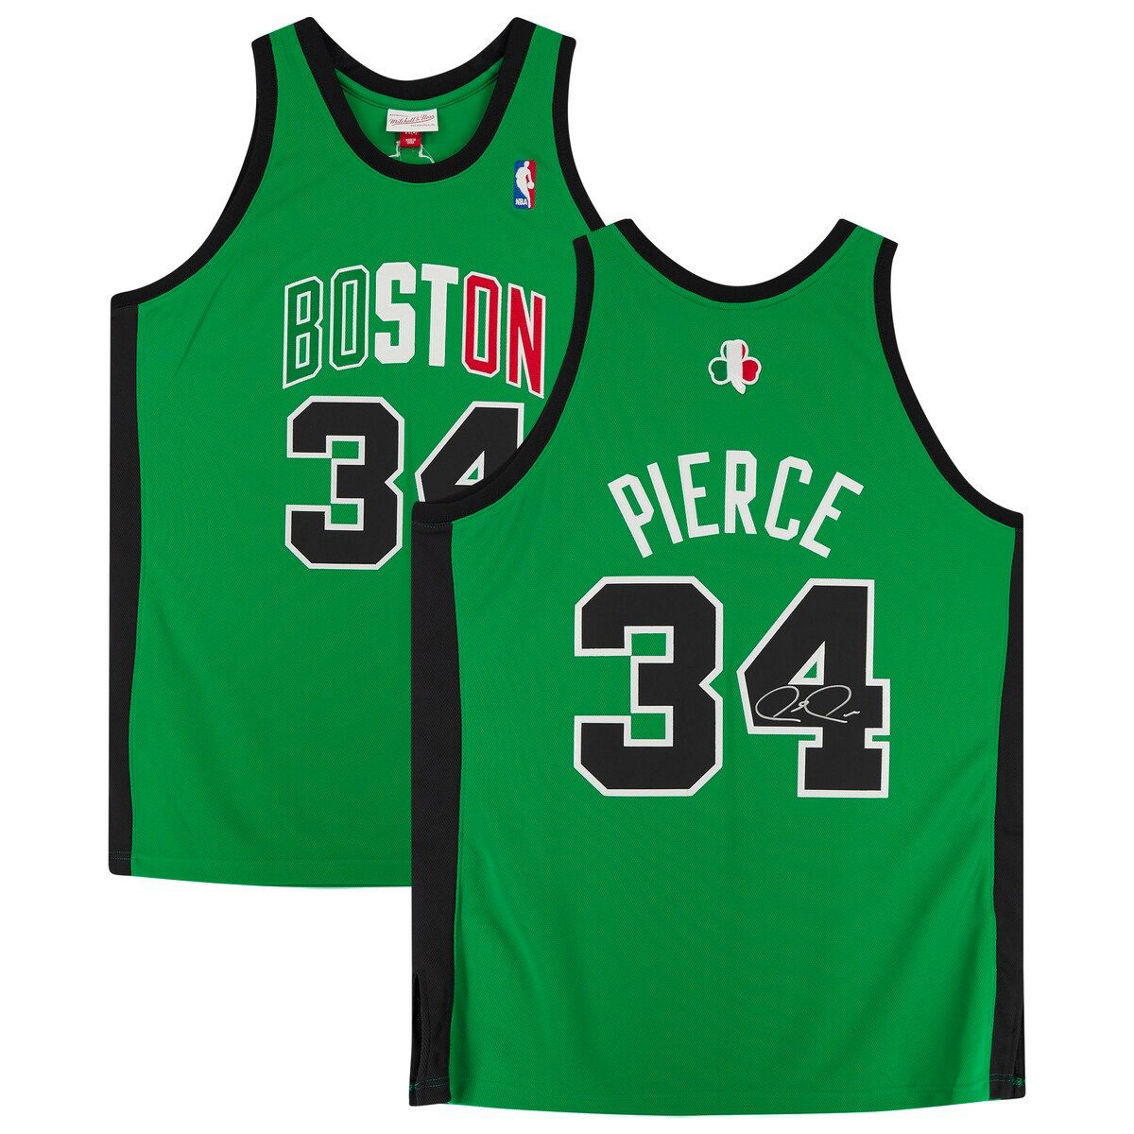 Fanatics Authentic Paul Pierce Green Boston Celtics Autographed 2007-08 Authentic Jersey - Image 2 of 4